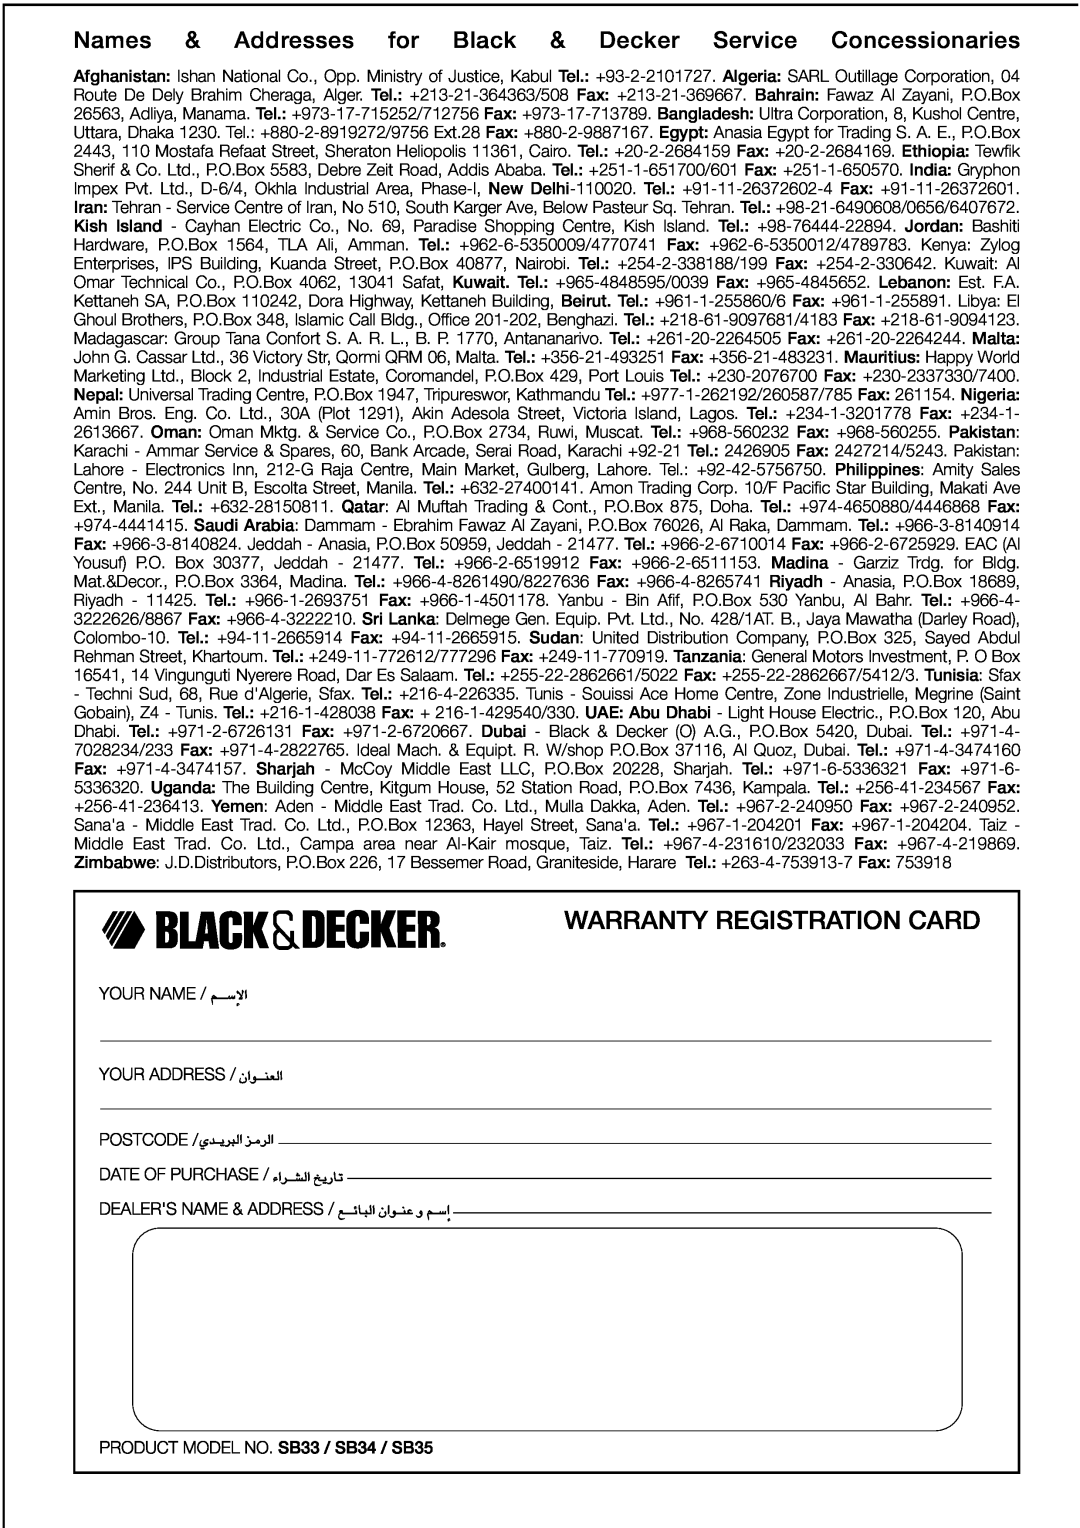 Black & Decker SB34, SB33, SB35 manual Warranty Registration Card 